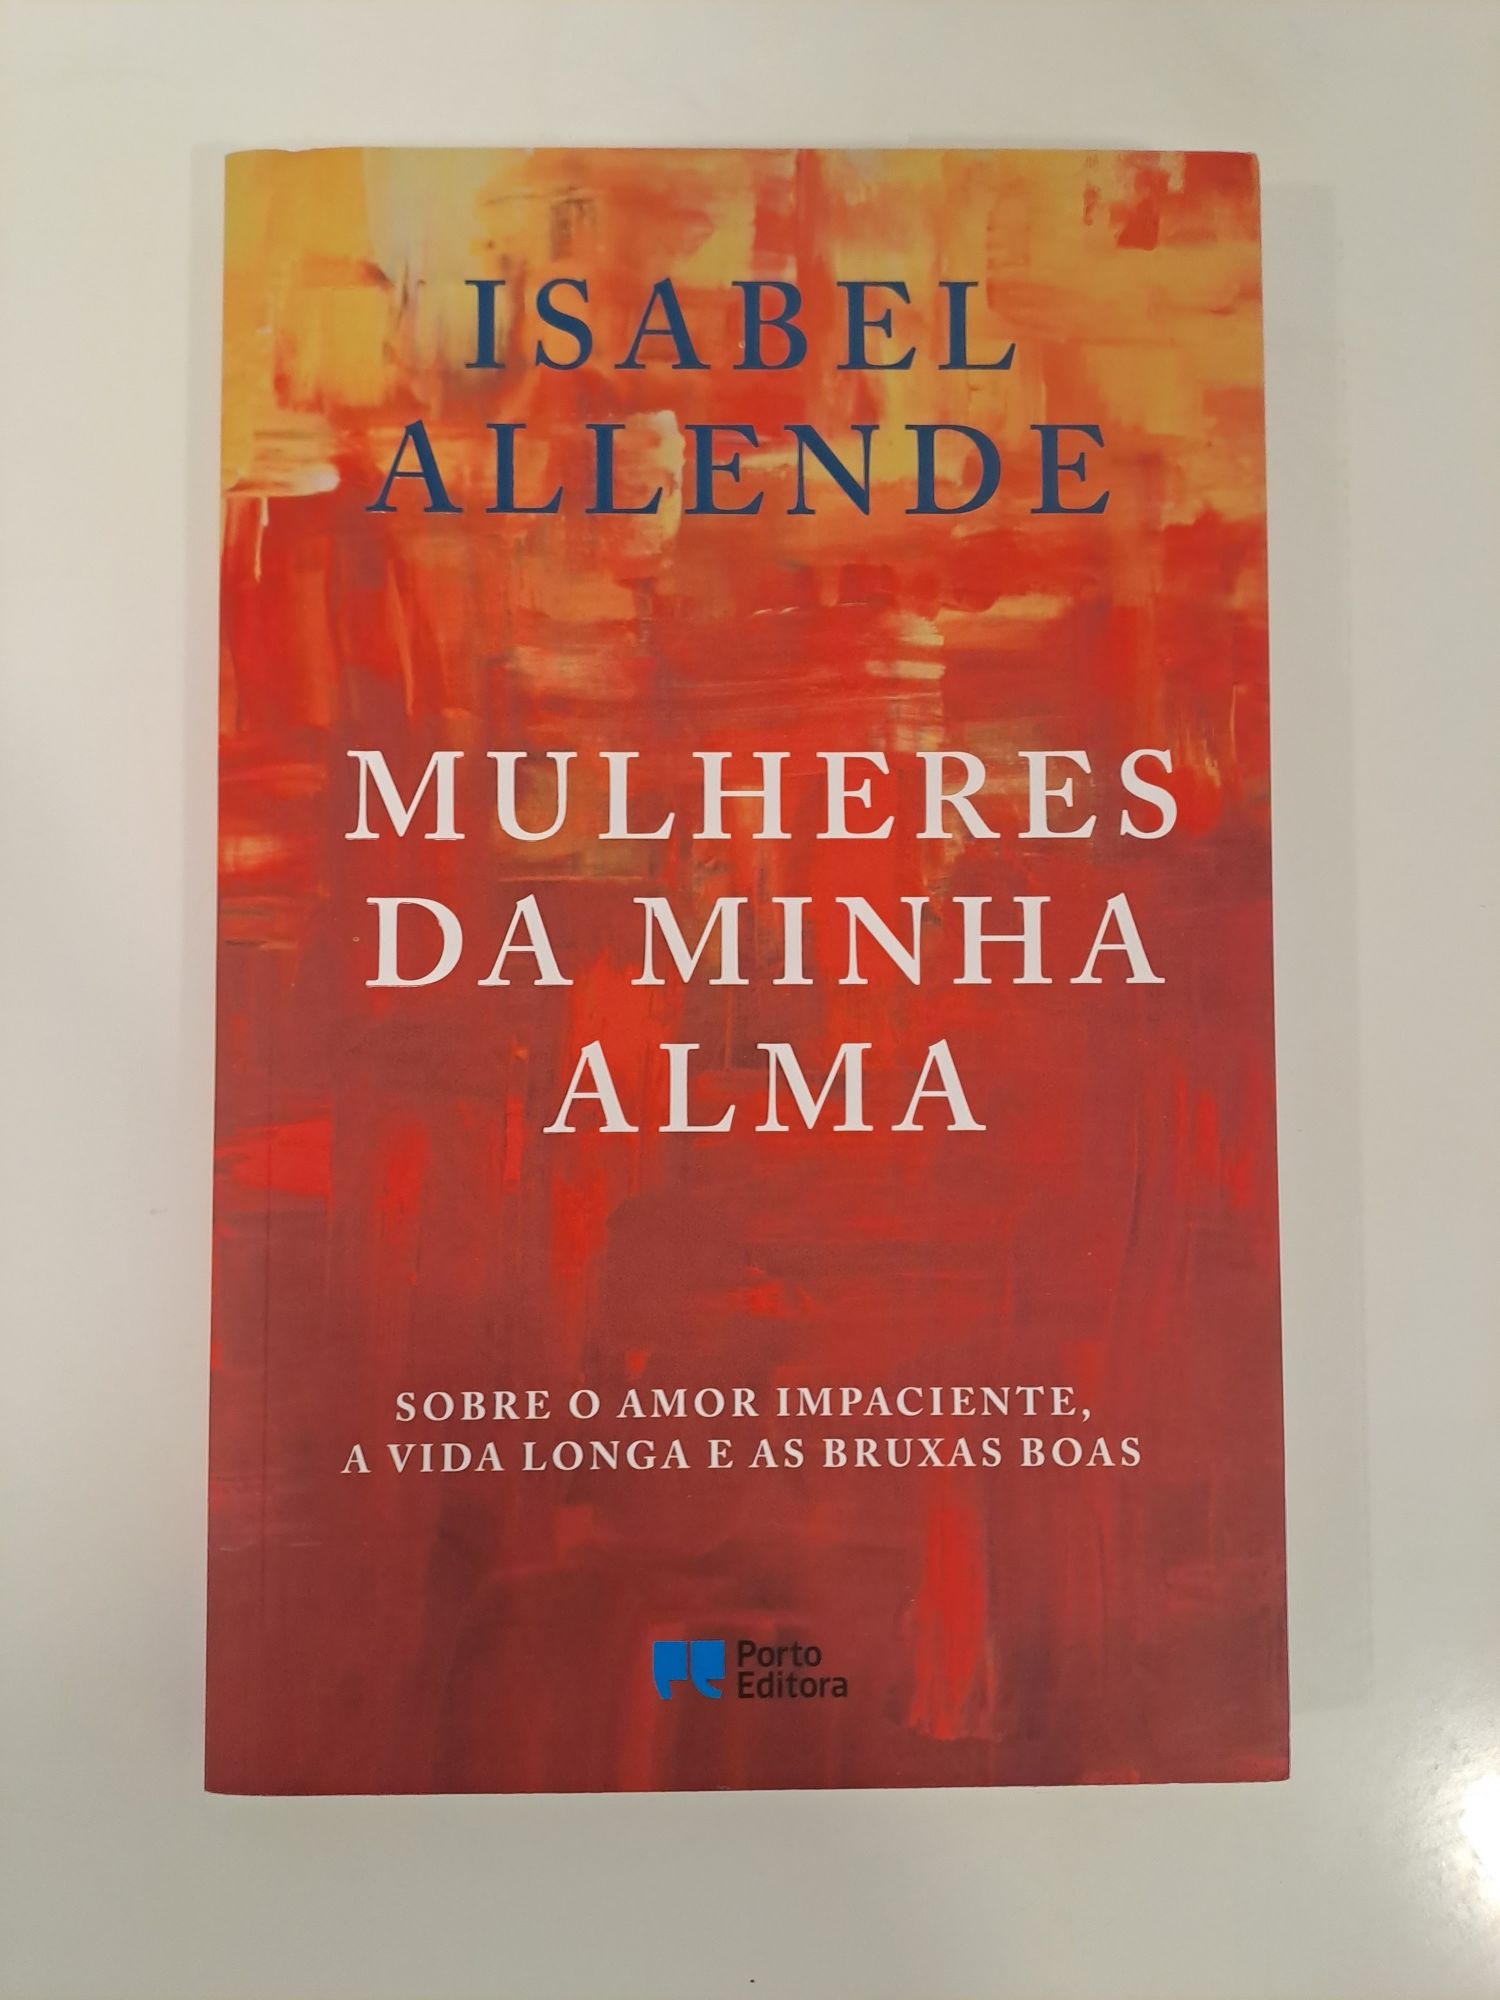 Isabel Allende - Mulheres da minha alma